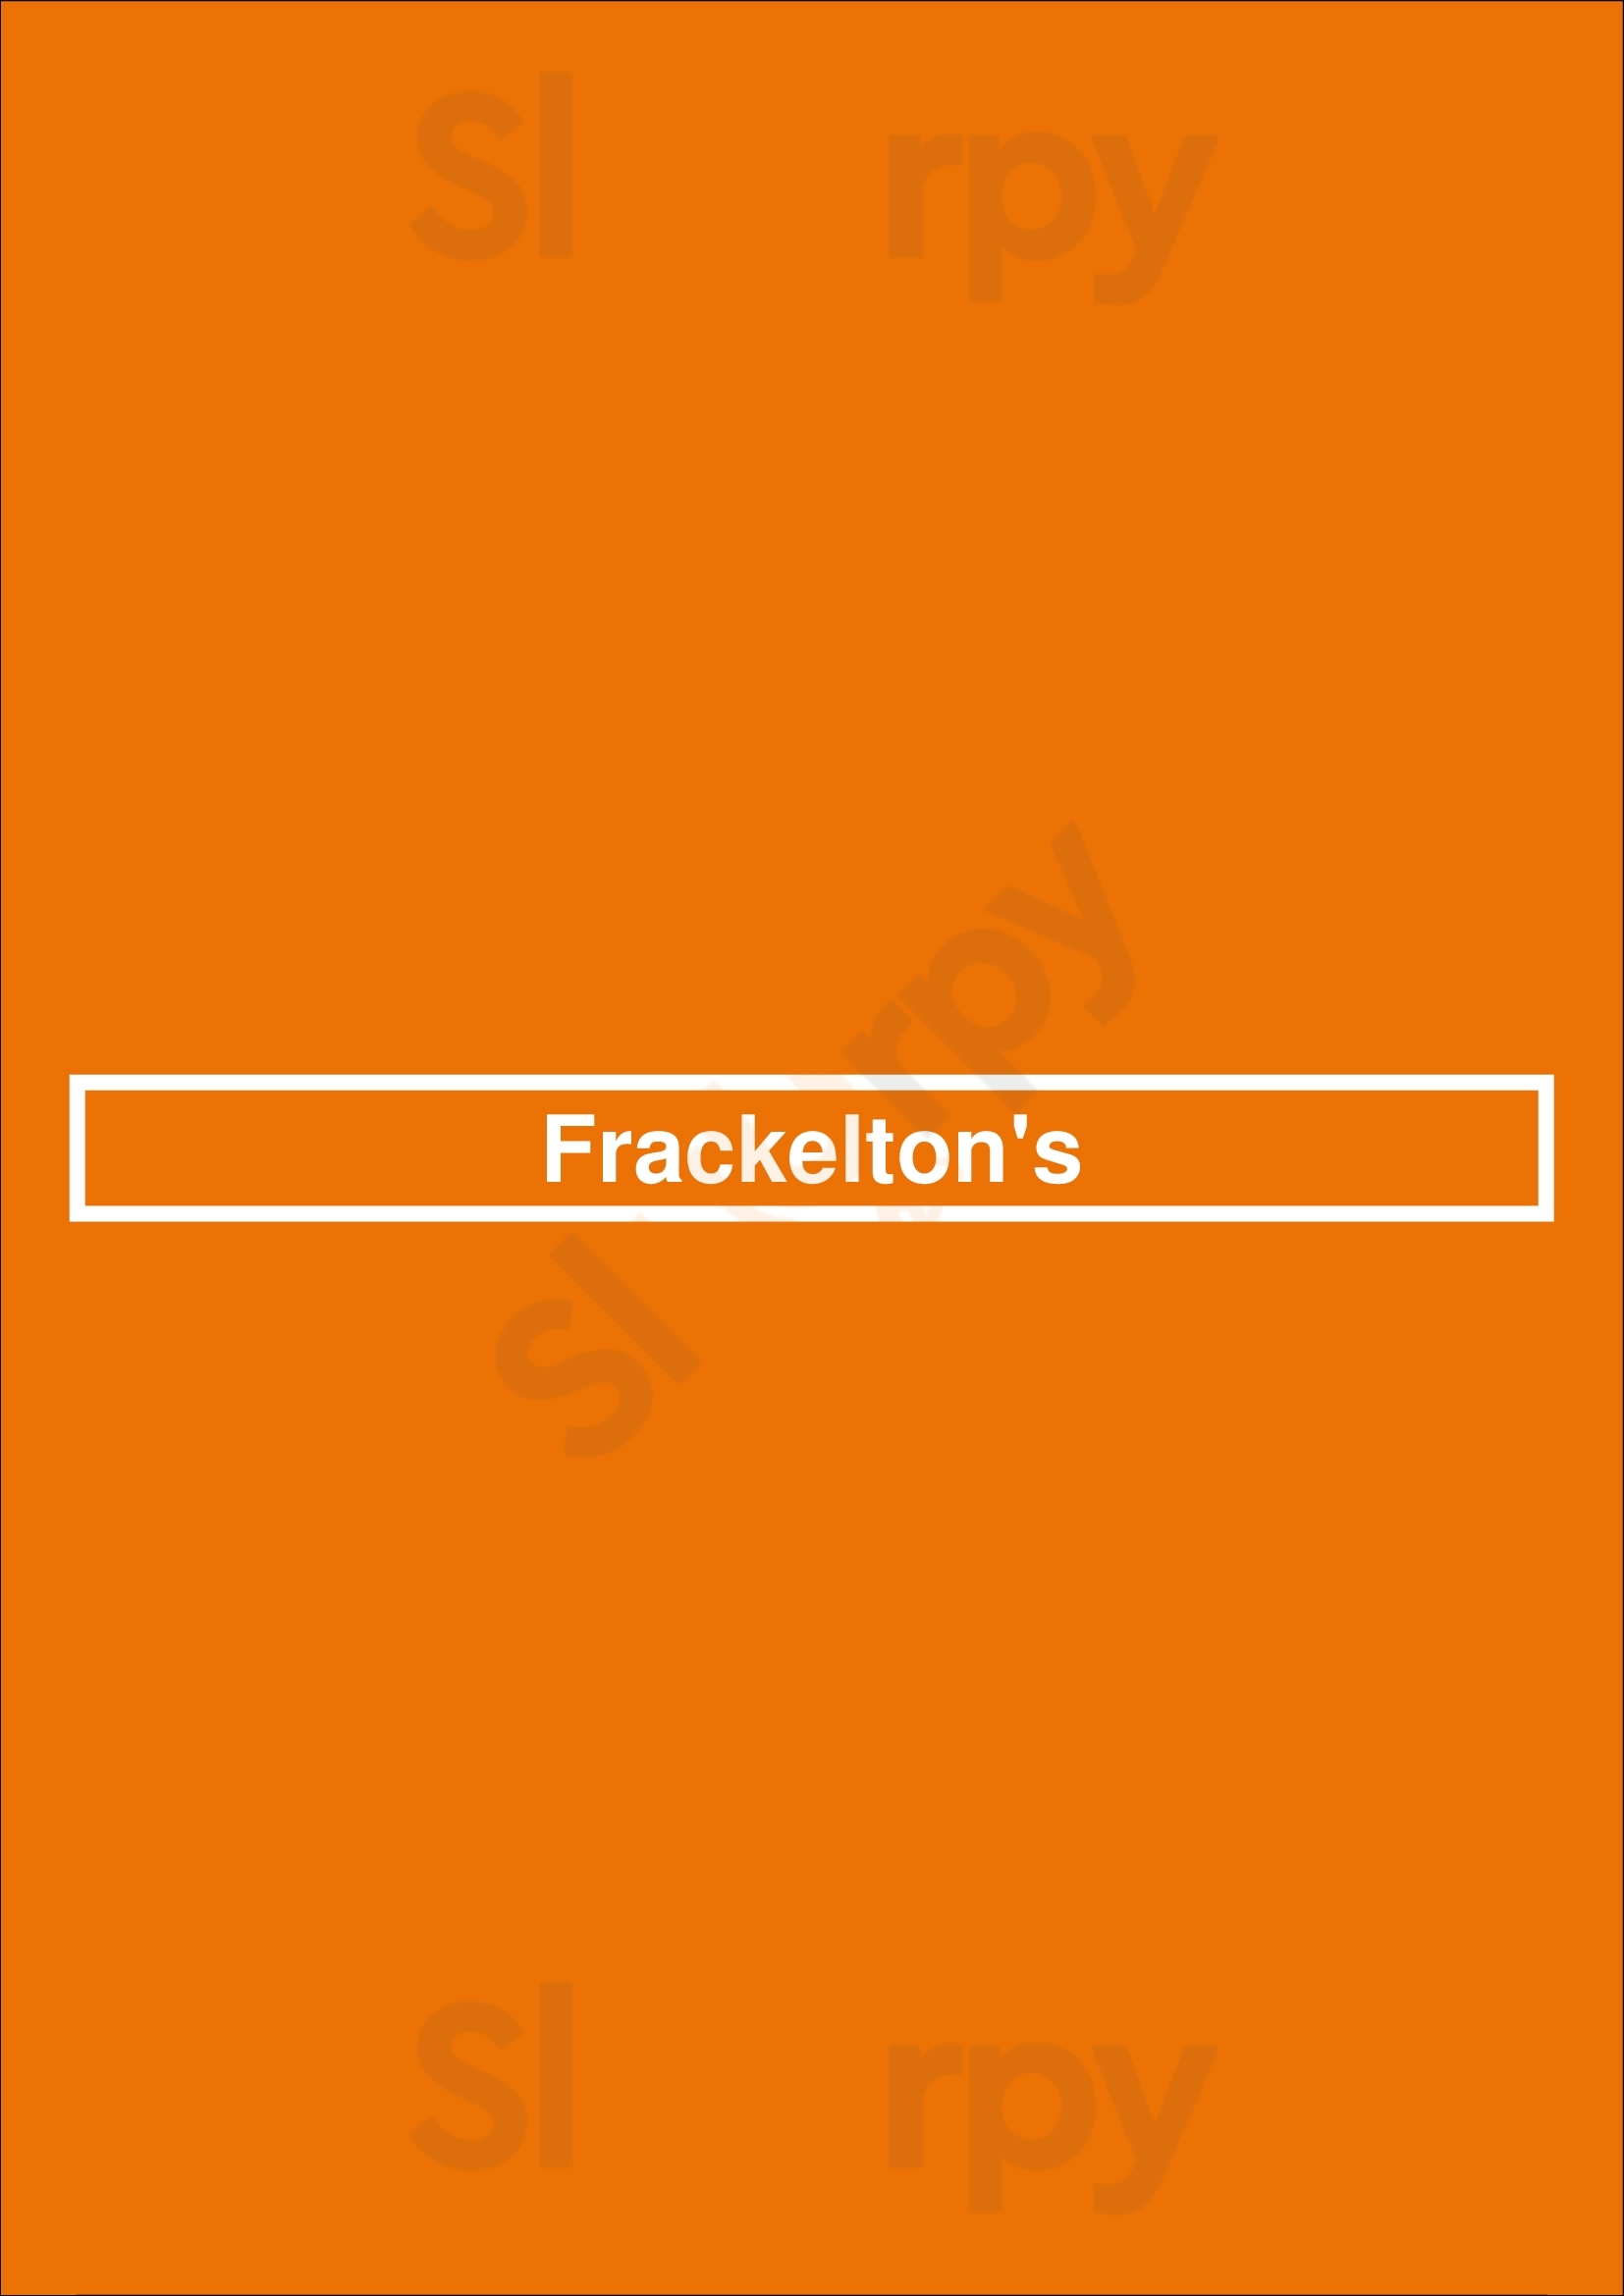 Frackelton's Sheridan Menu - 1